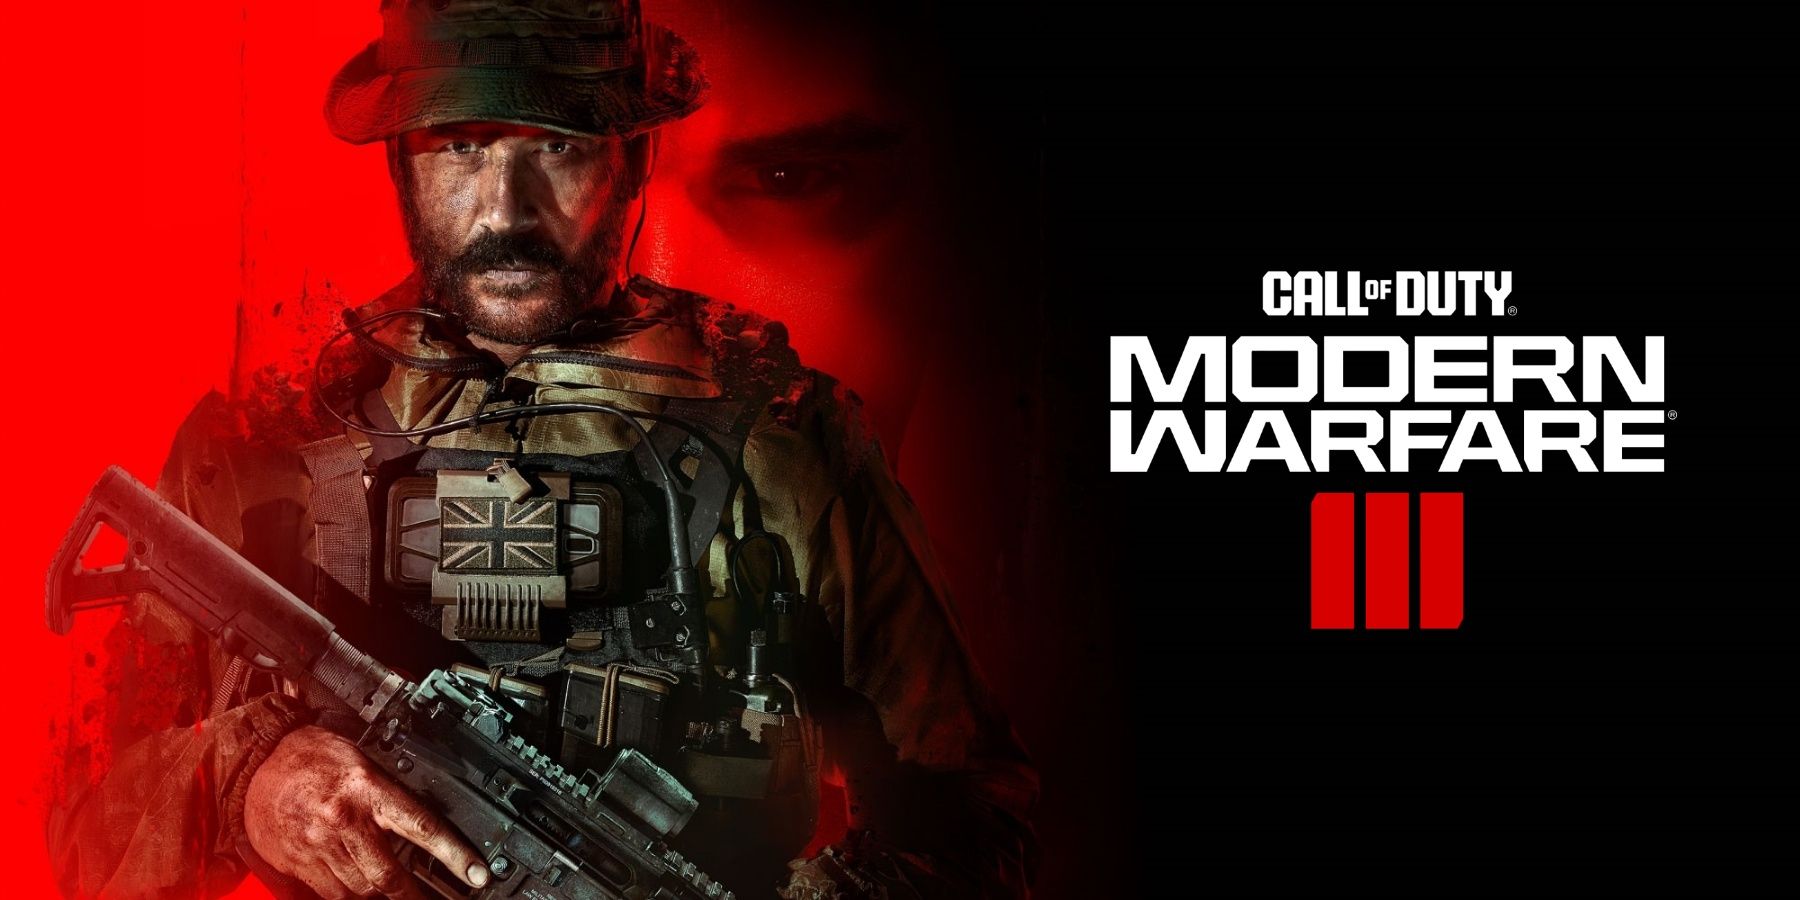 3. "Modern Warfare Discount Code" on Facebook - wide 7